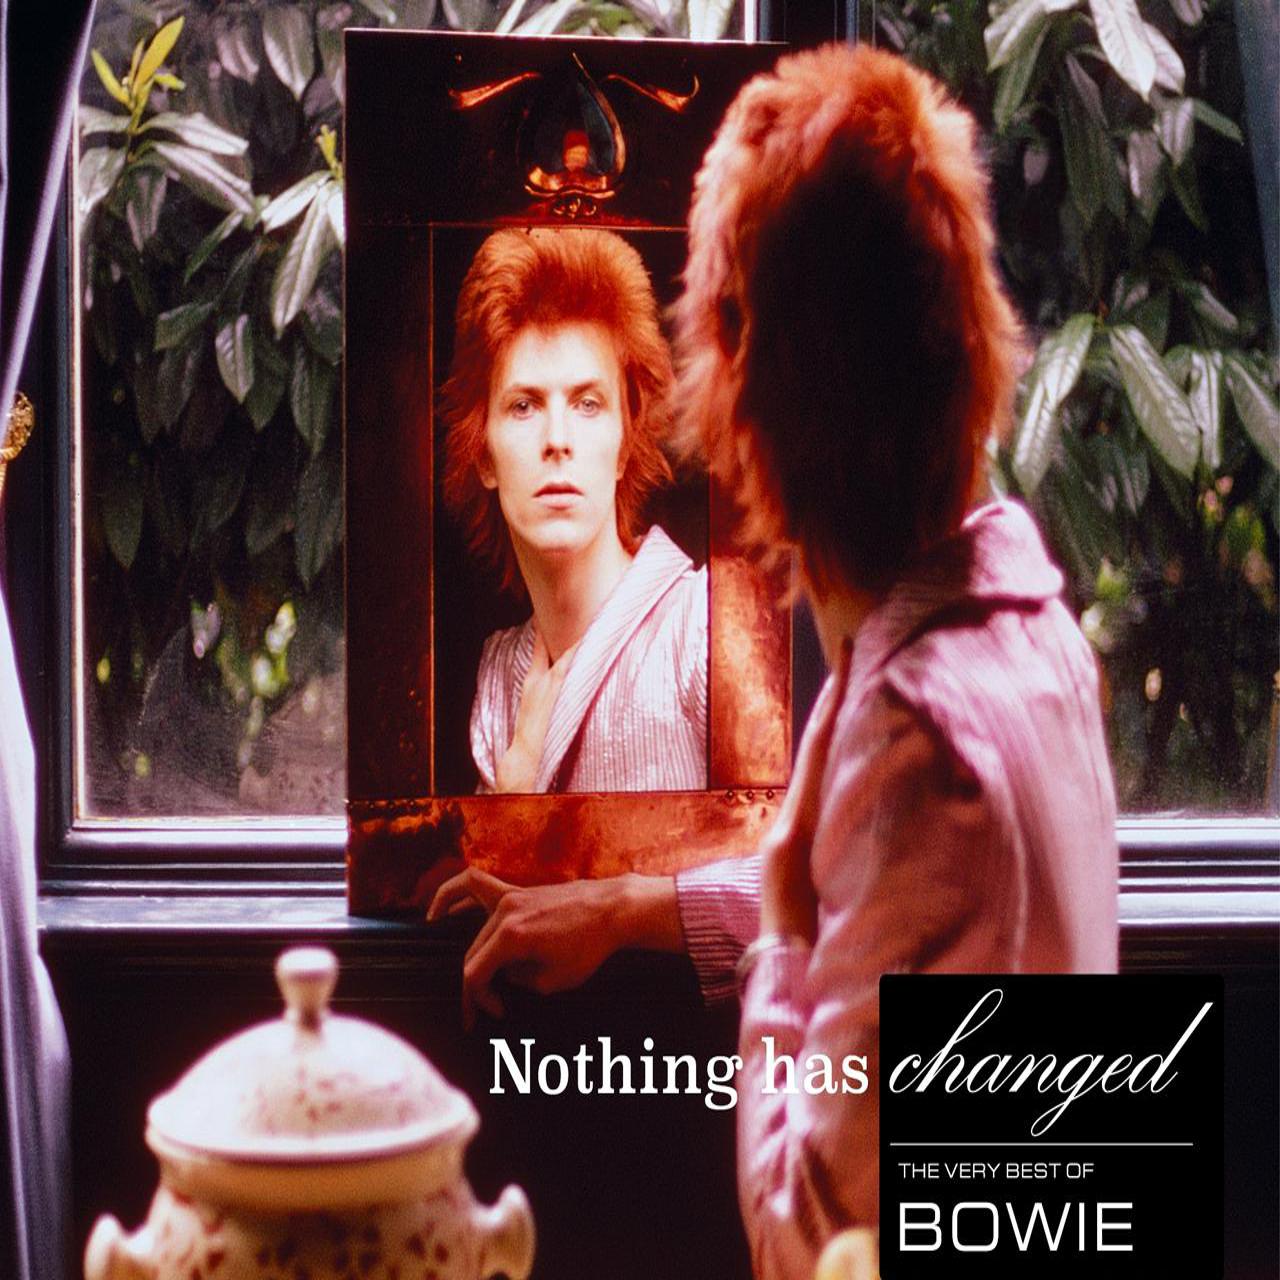 Musica: David Bowie, esce la raccolta 'Nothing has changed'